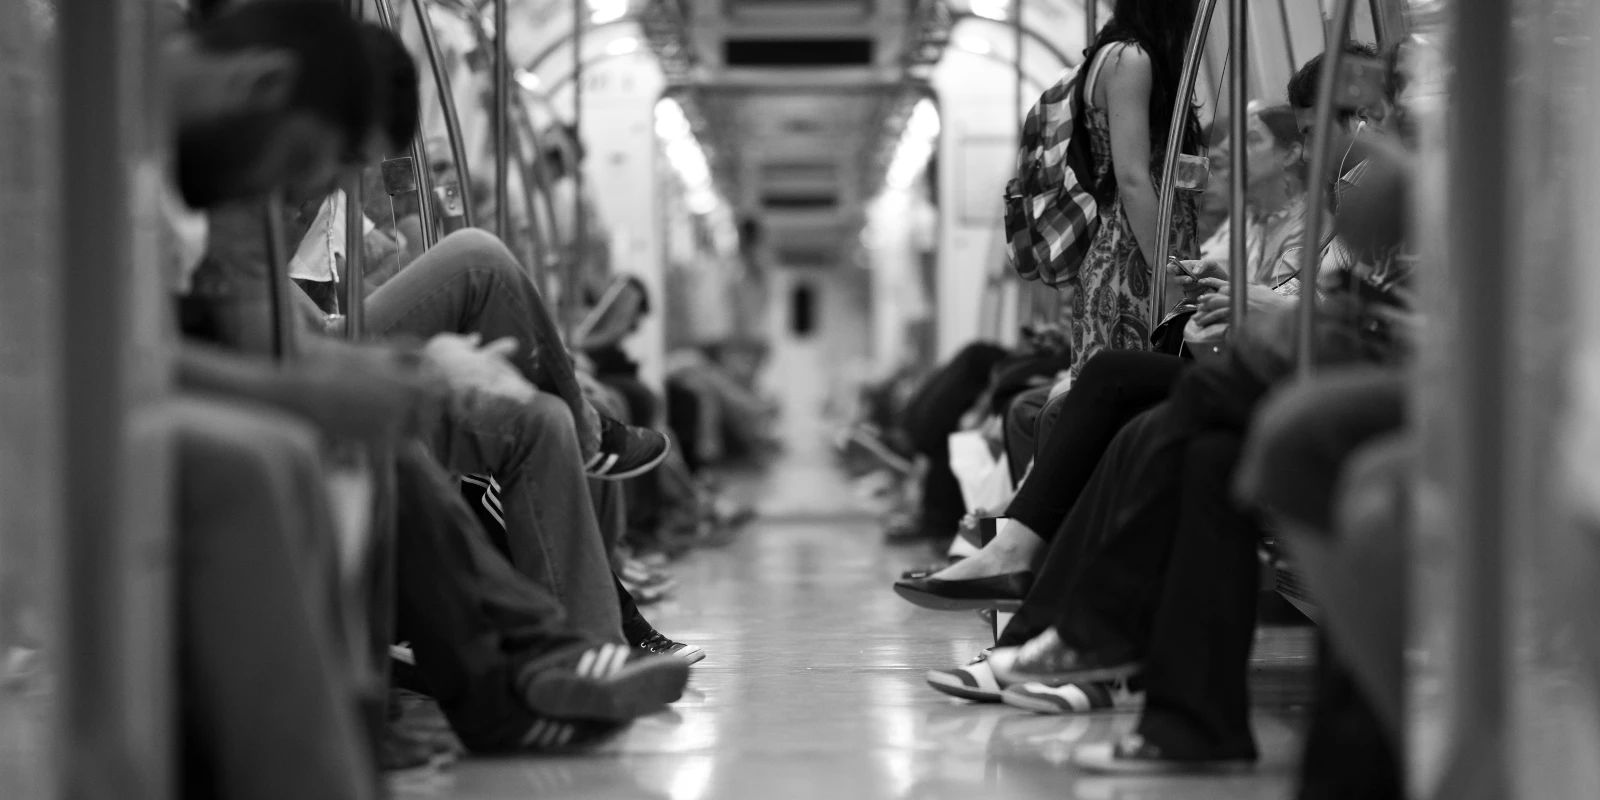 'Panicked' London train commuters force open doors, flee onto tracks when man reads the Bible aloud